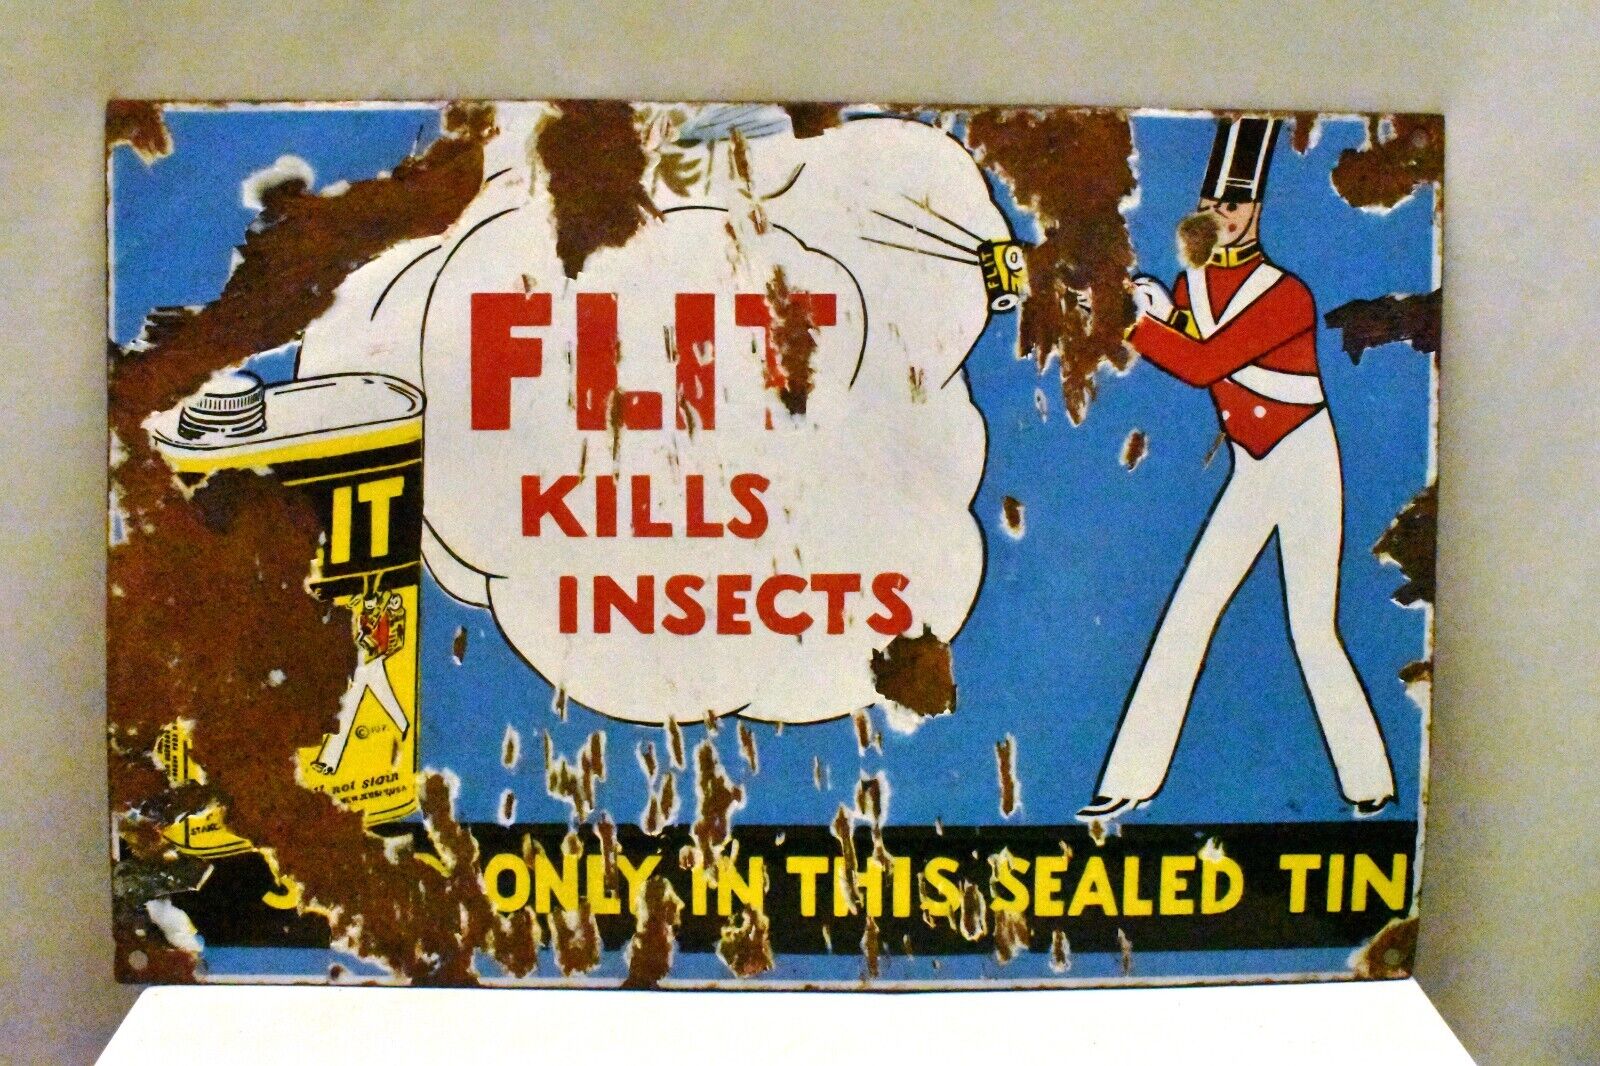  Vintage Flit Kills Insects Sign Porcelain Enamel Advertising Of Pesticide Rare